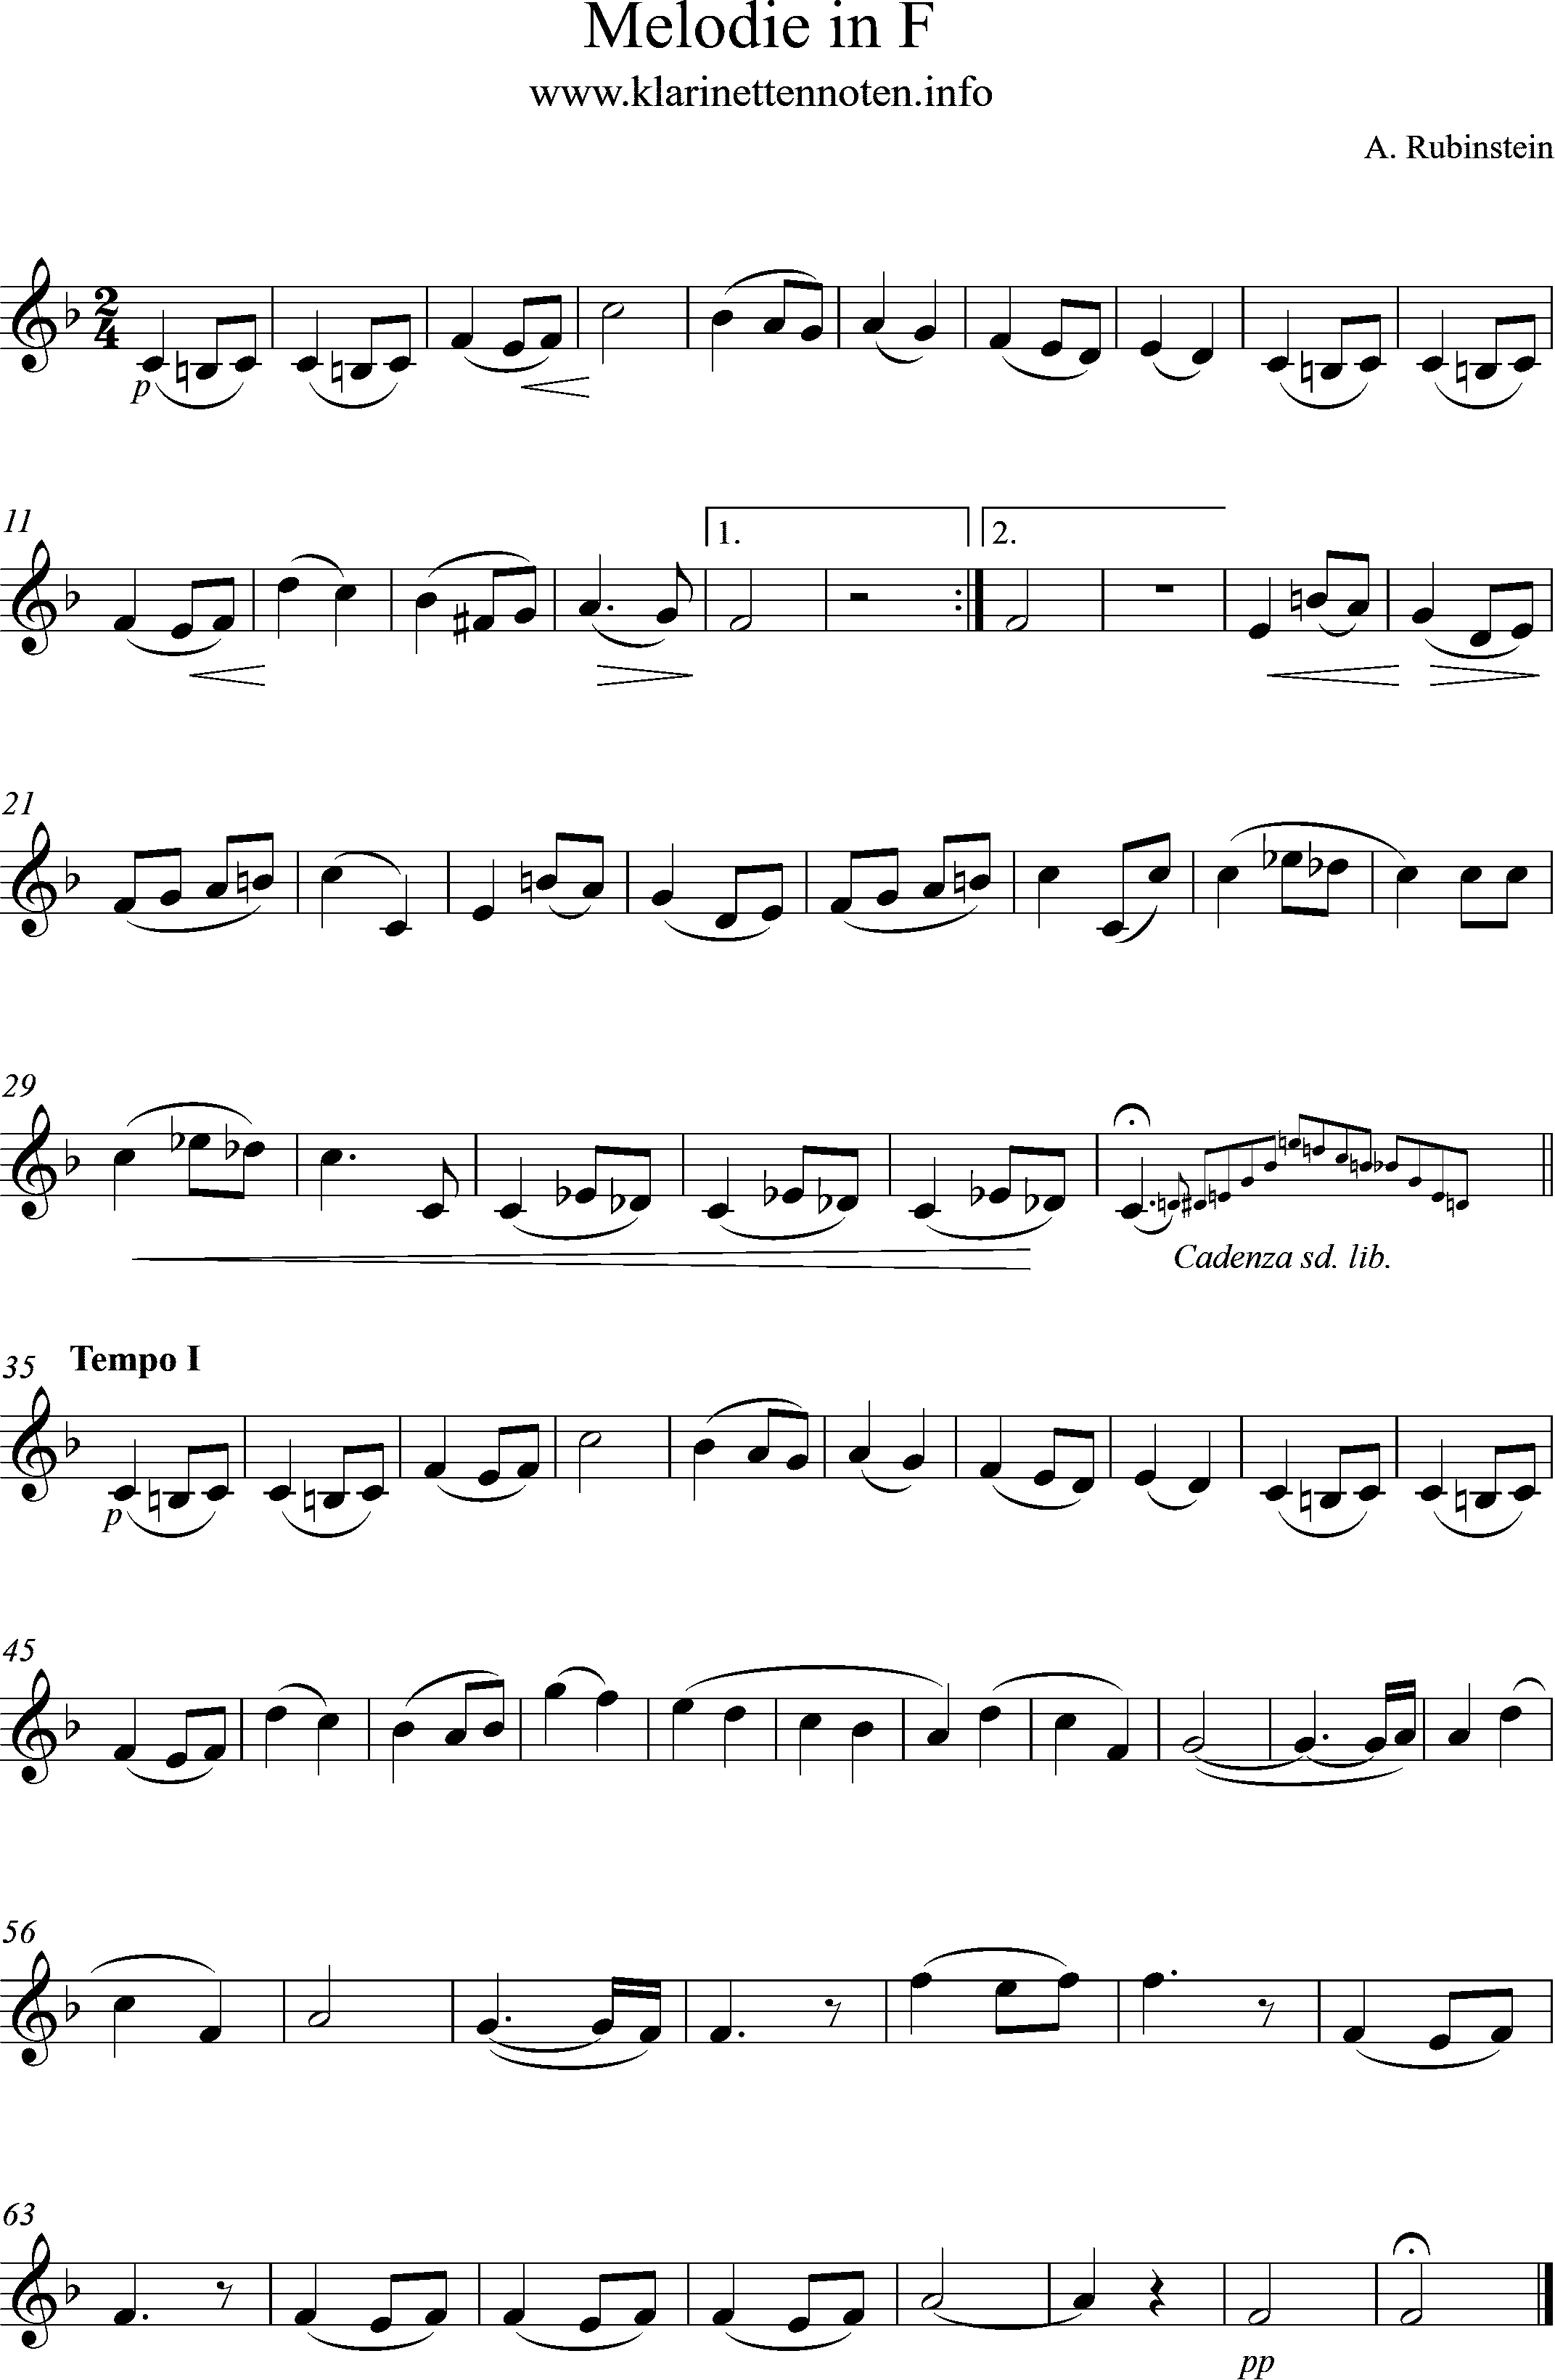 Sheeetmusic Solopart, melody in F, rubinstein